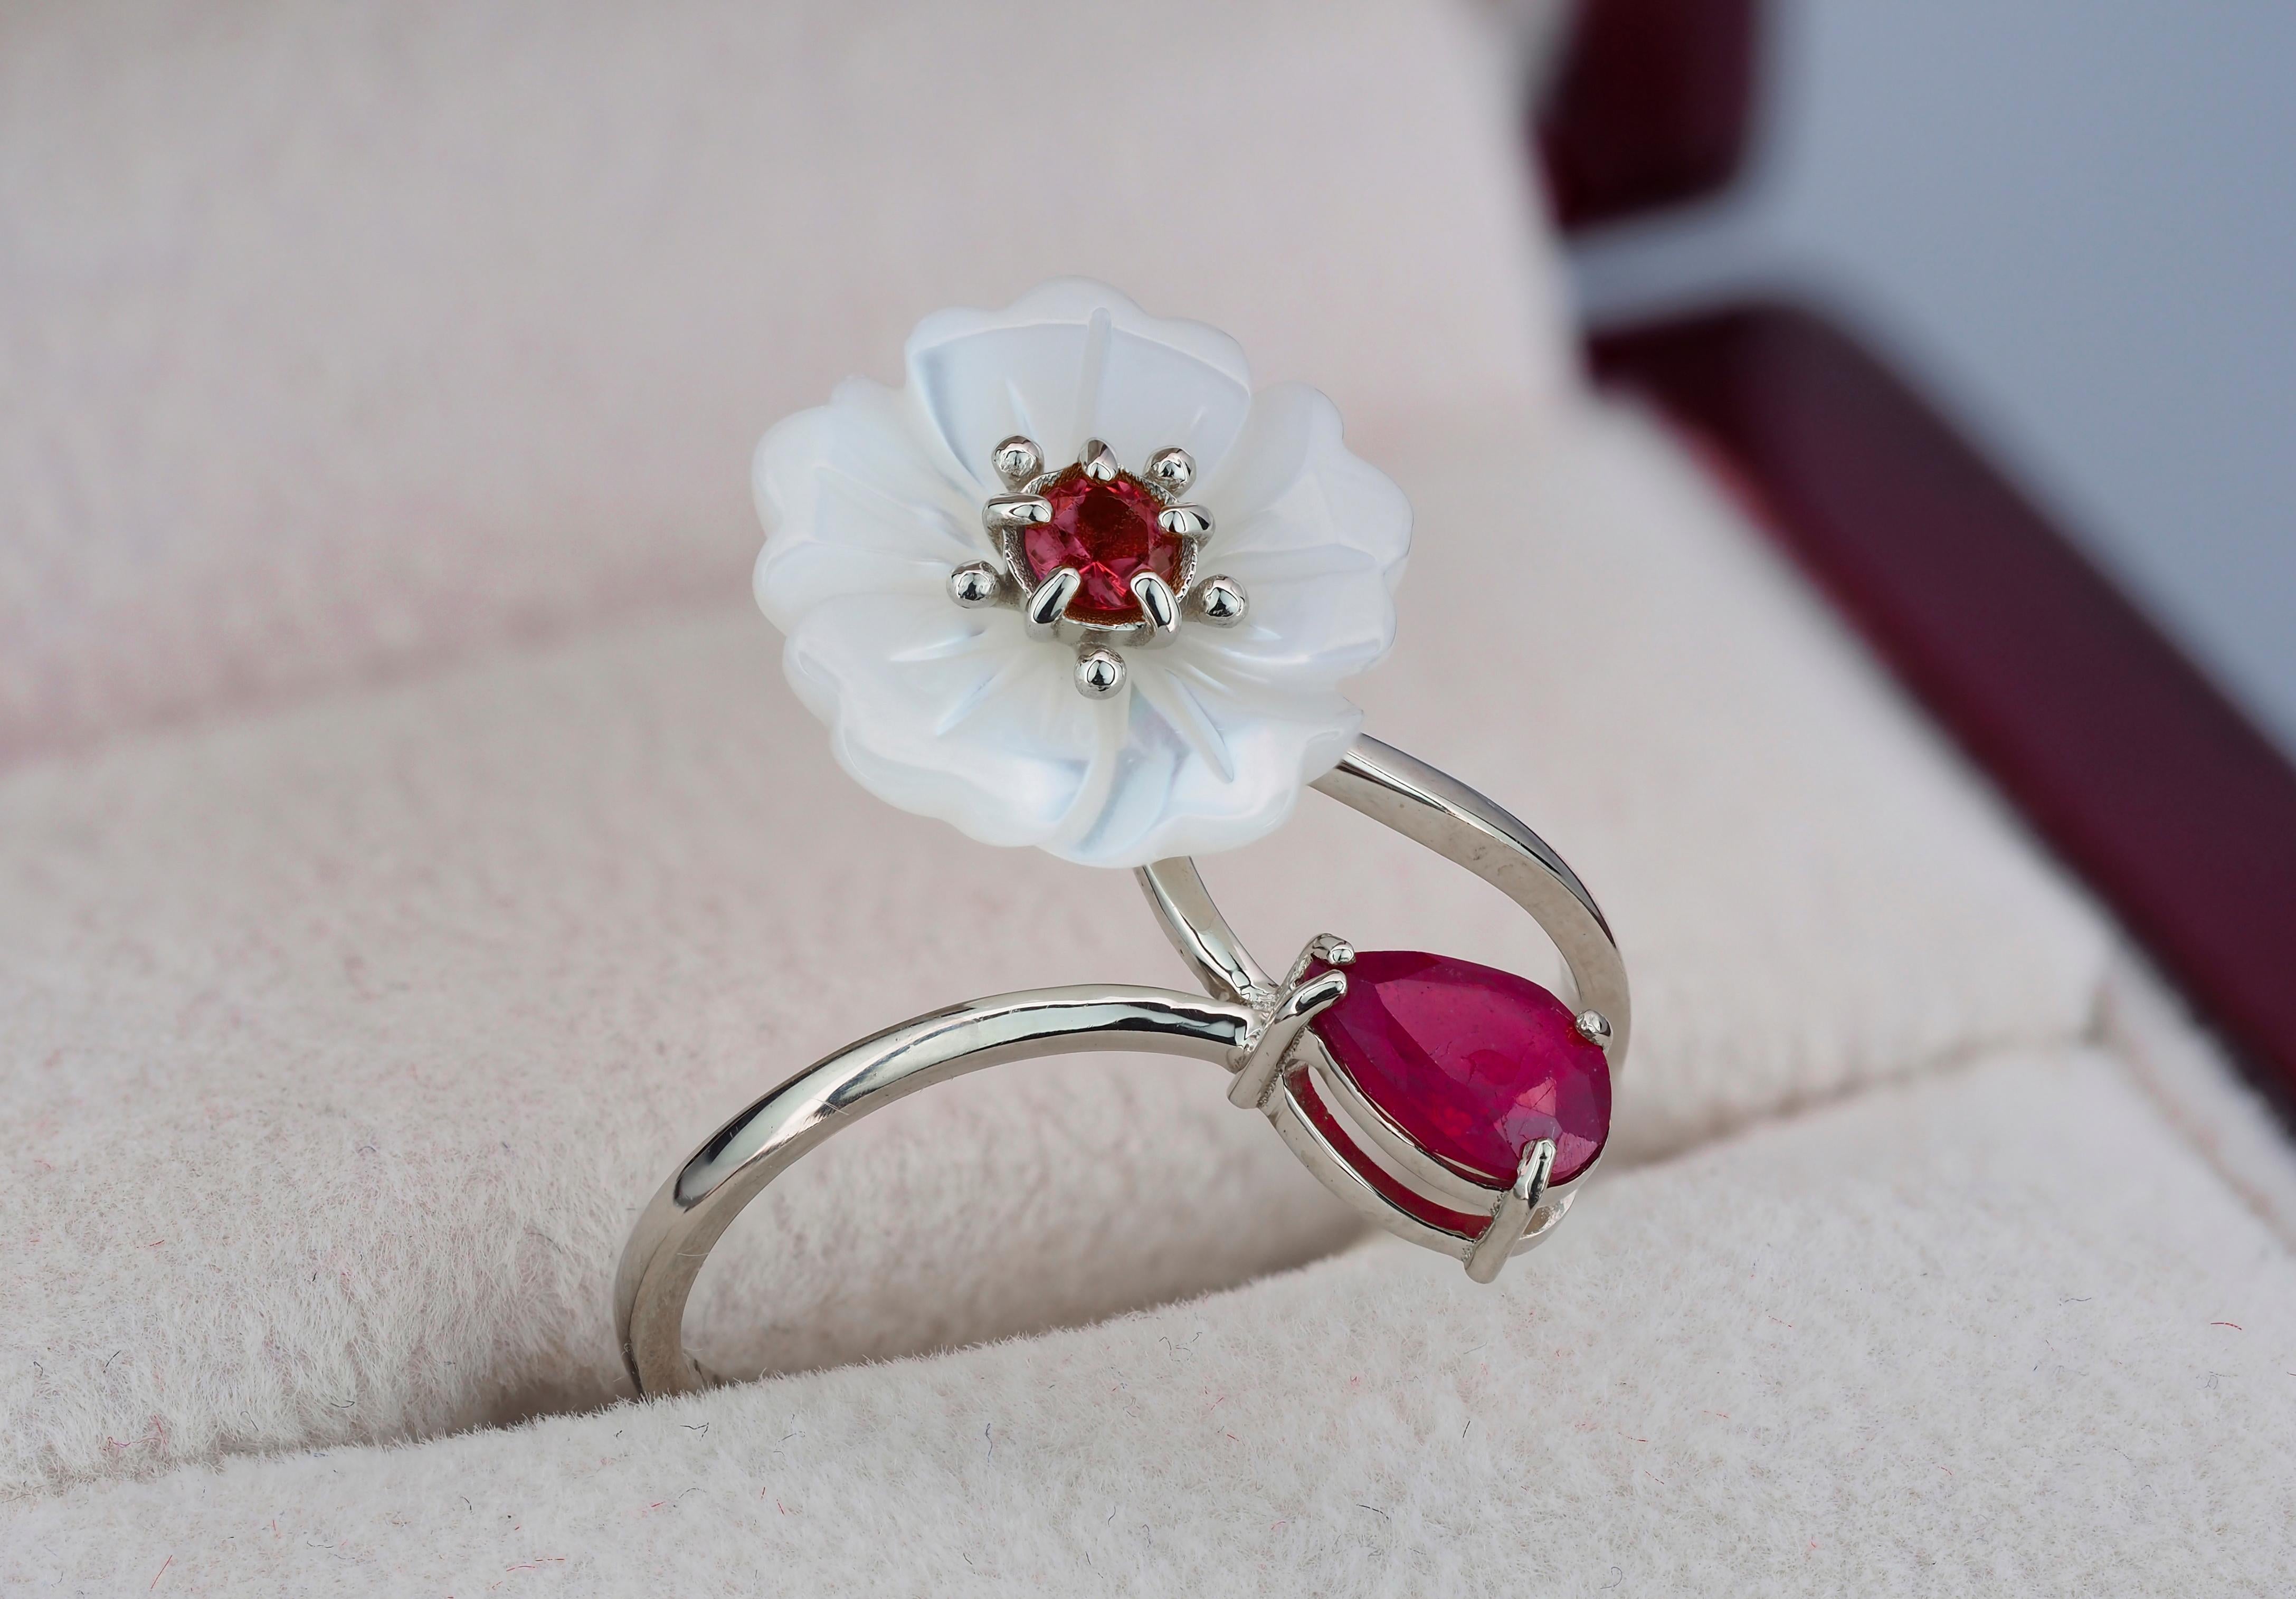 For Sale:  Carved Flower 14k ring with gemstones 4